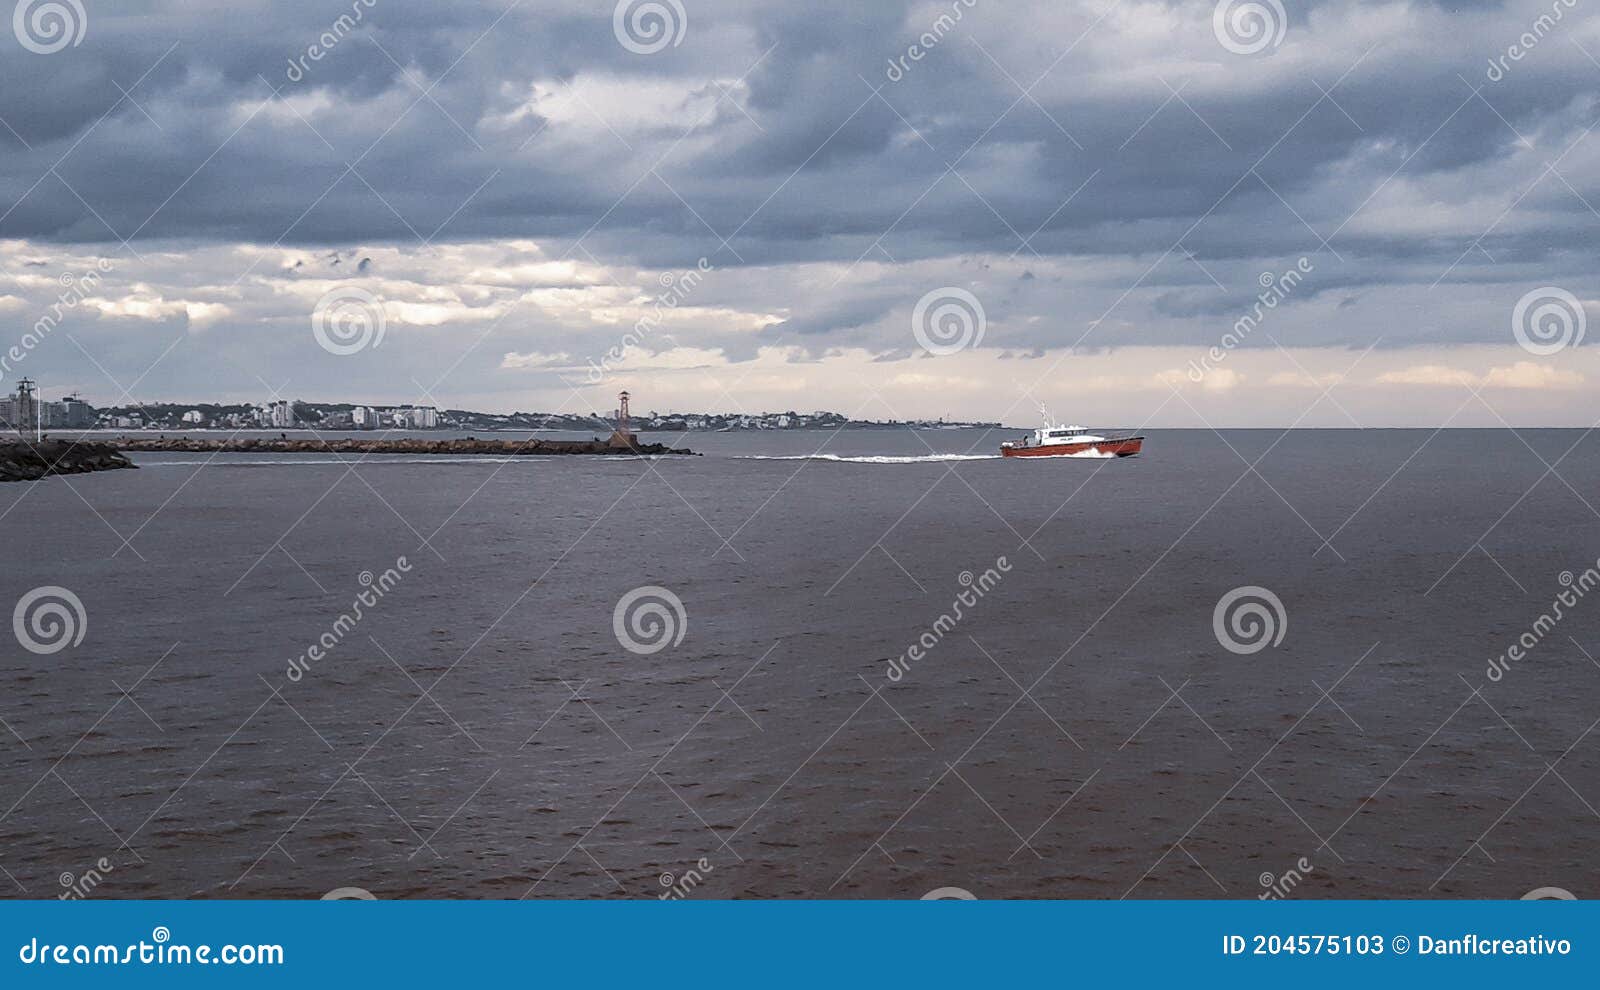 buceo port panoramic landscape, montevideo, uruguay